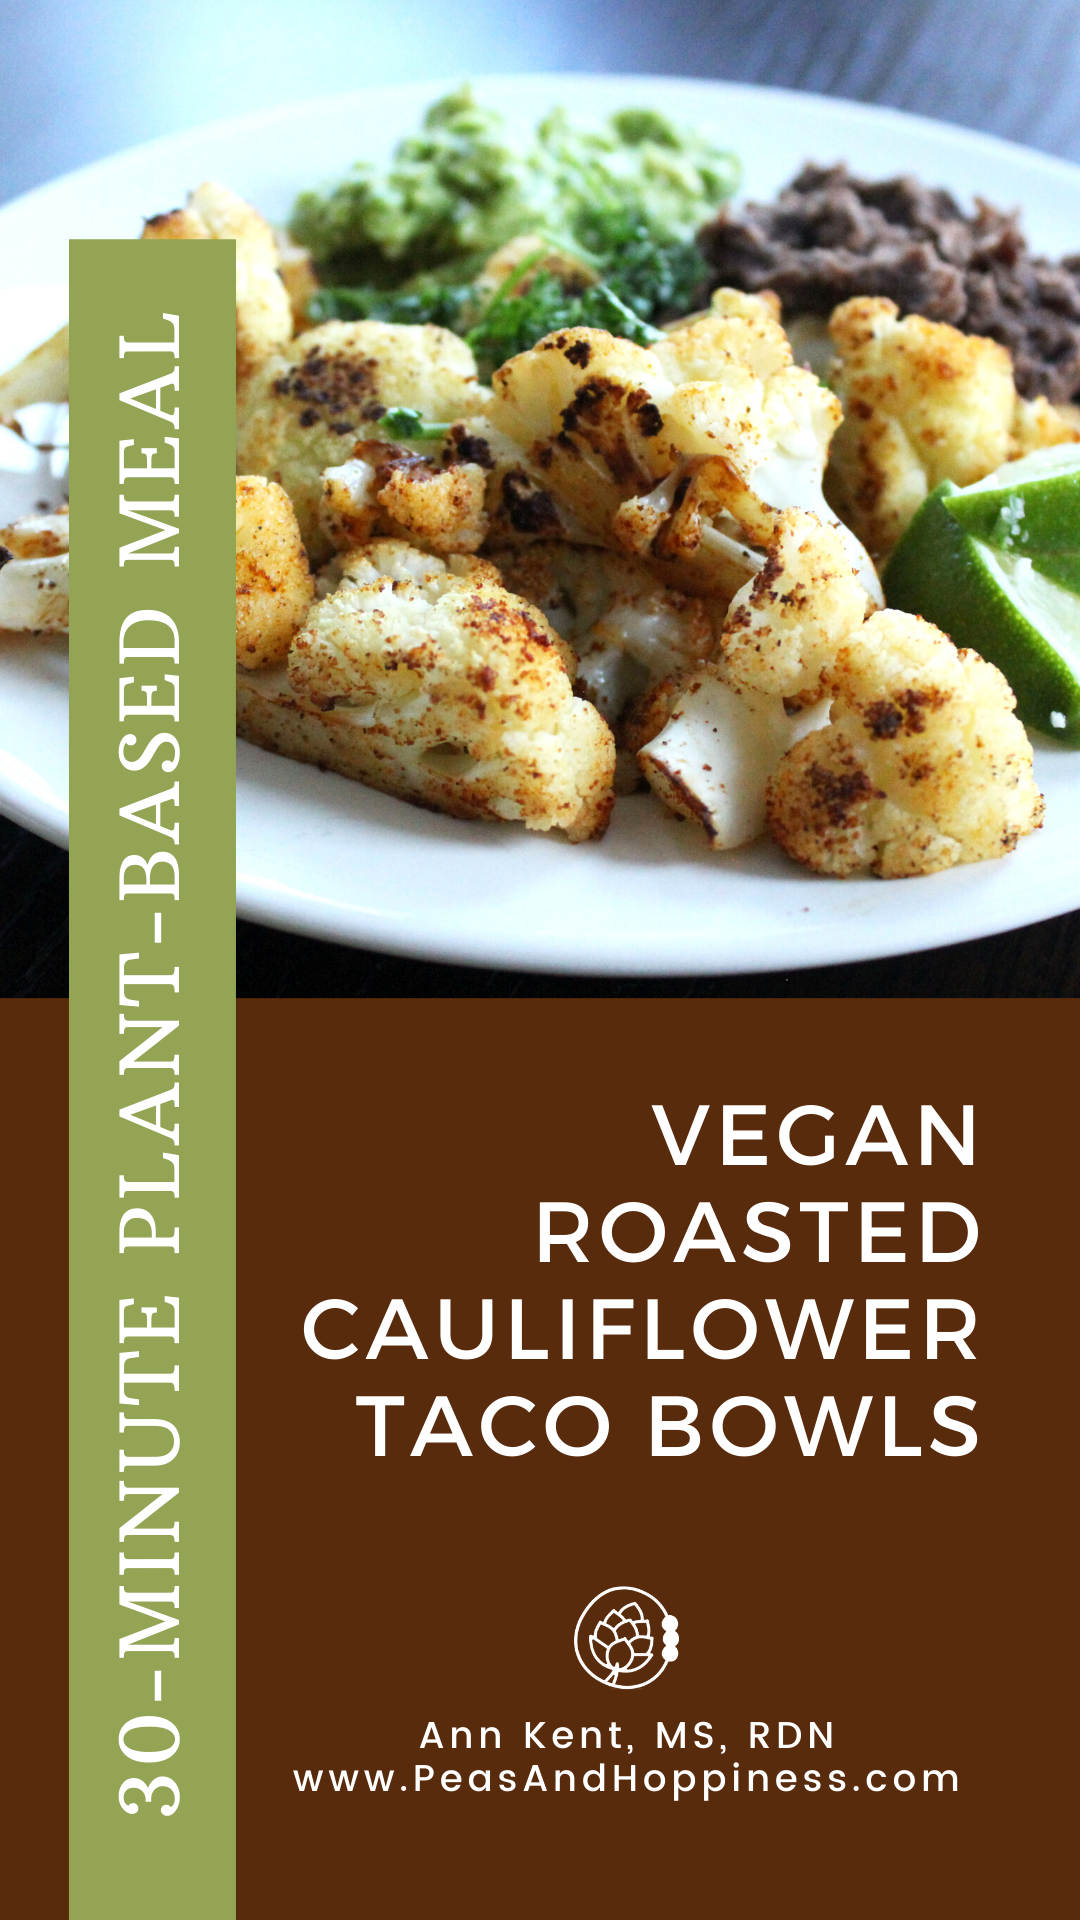 Vegan Roasted Cauliflower Taco Bowls Recipe Easy 30 Minute Plant Based Meal